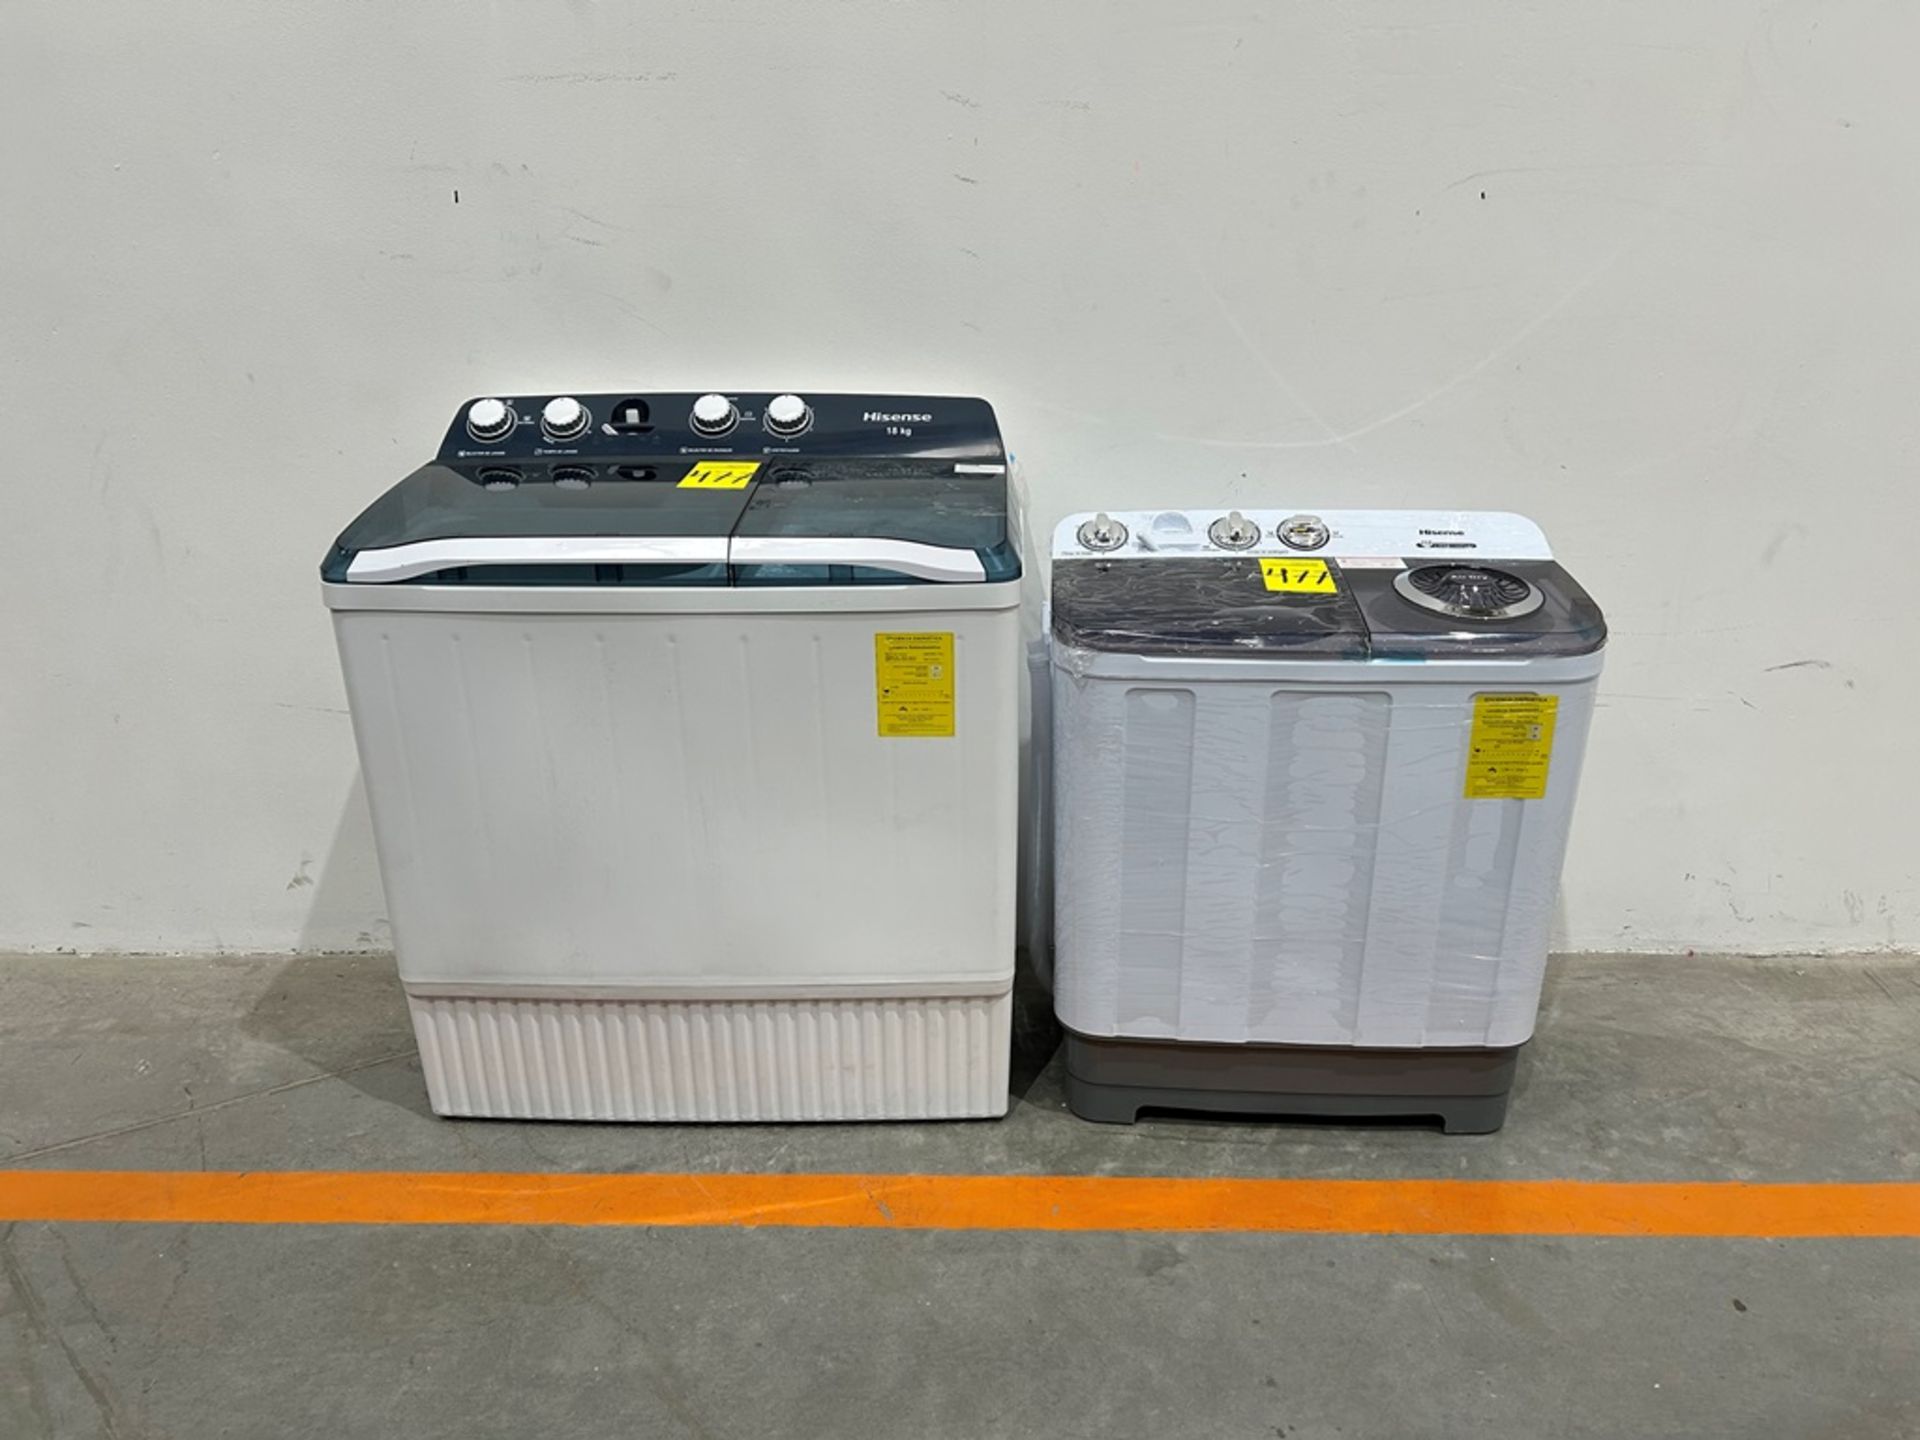 Lote de 2 lavadoras contiene: 1 Lavadora de 18 KG Marca HISENSE, Modelo WSA1801P, Serie 220342, Col